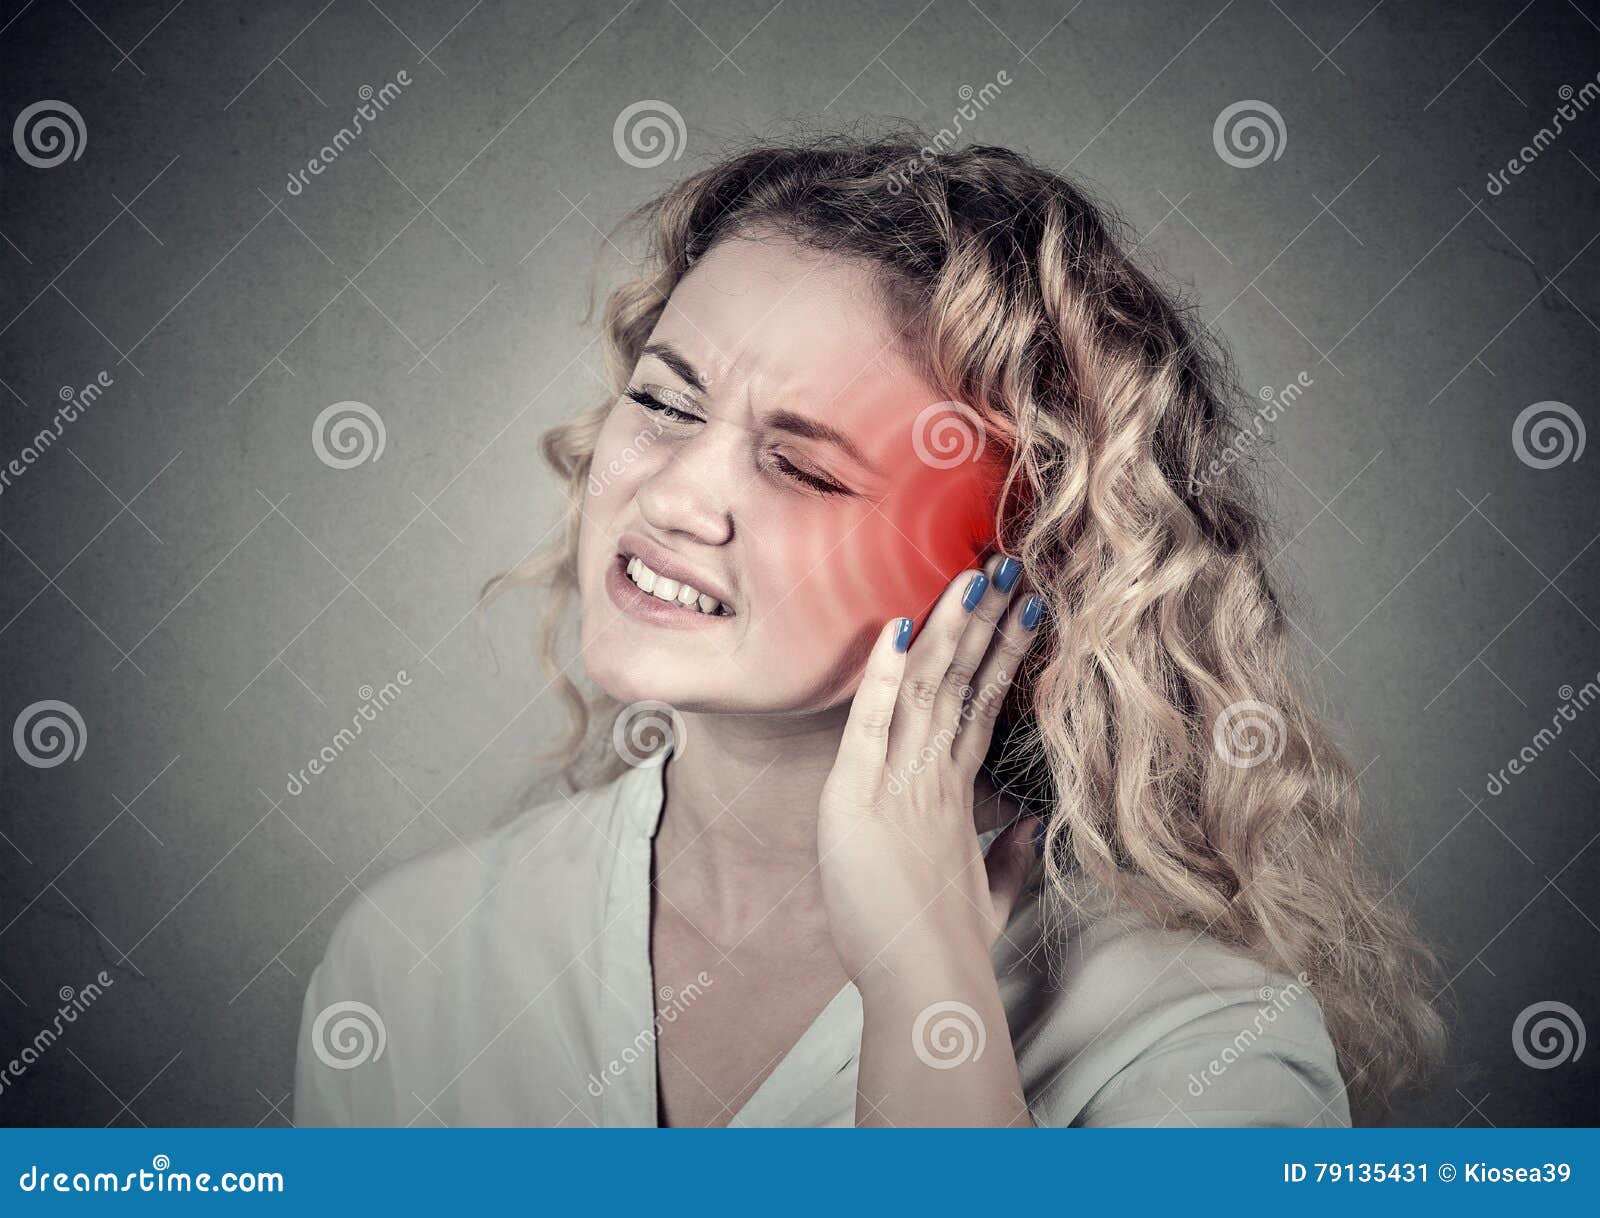 tinnitus. sick female having ear pain touching her painful head